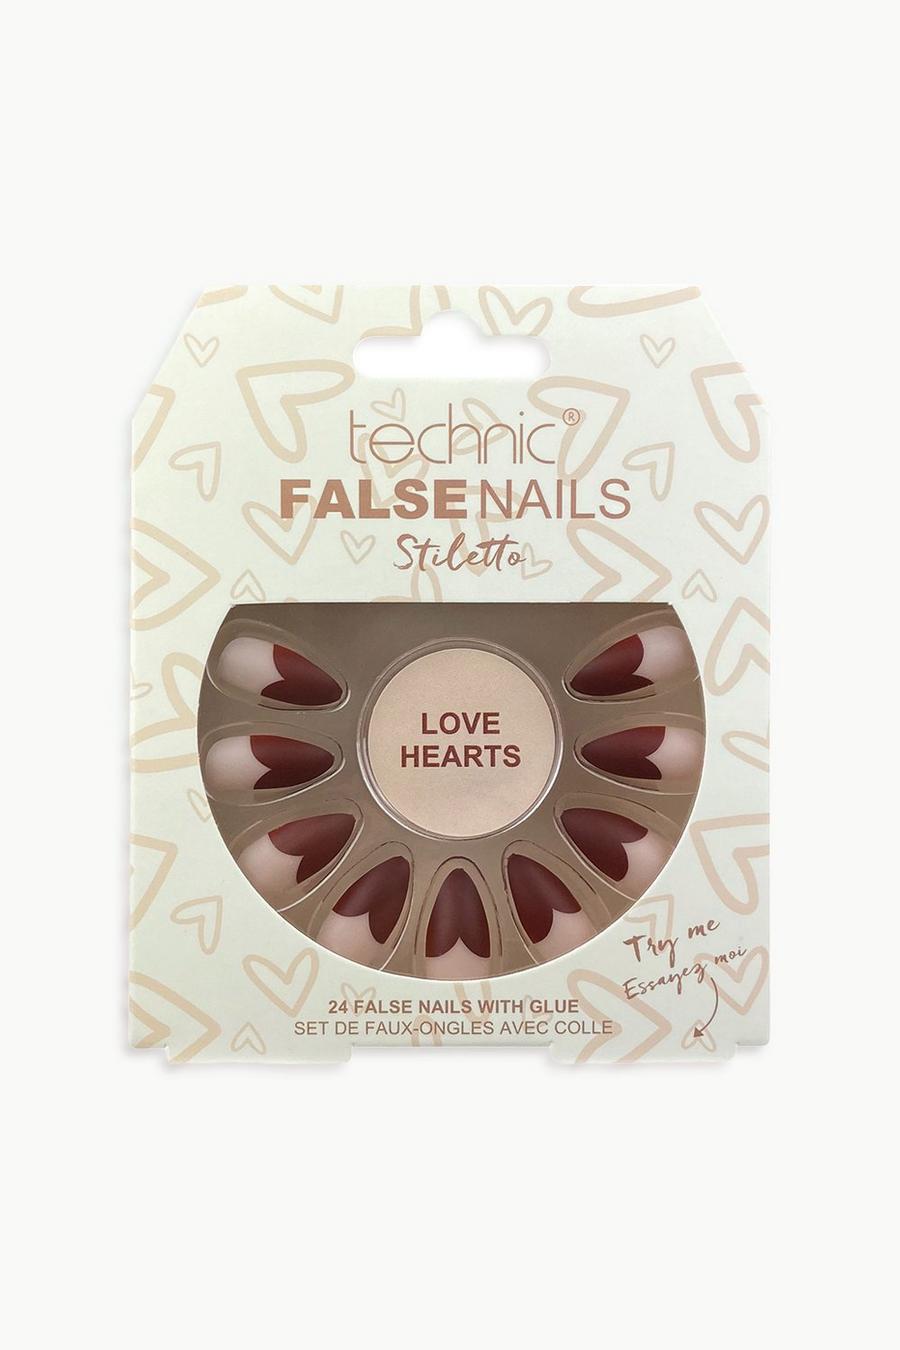 Cream white Technic False Nails Stiletto - Love Hearts image number 1